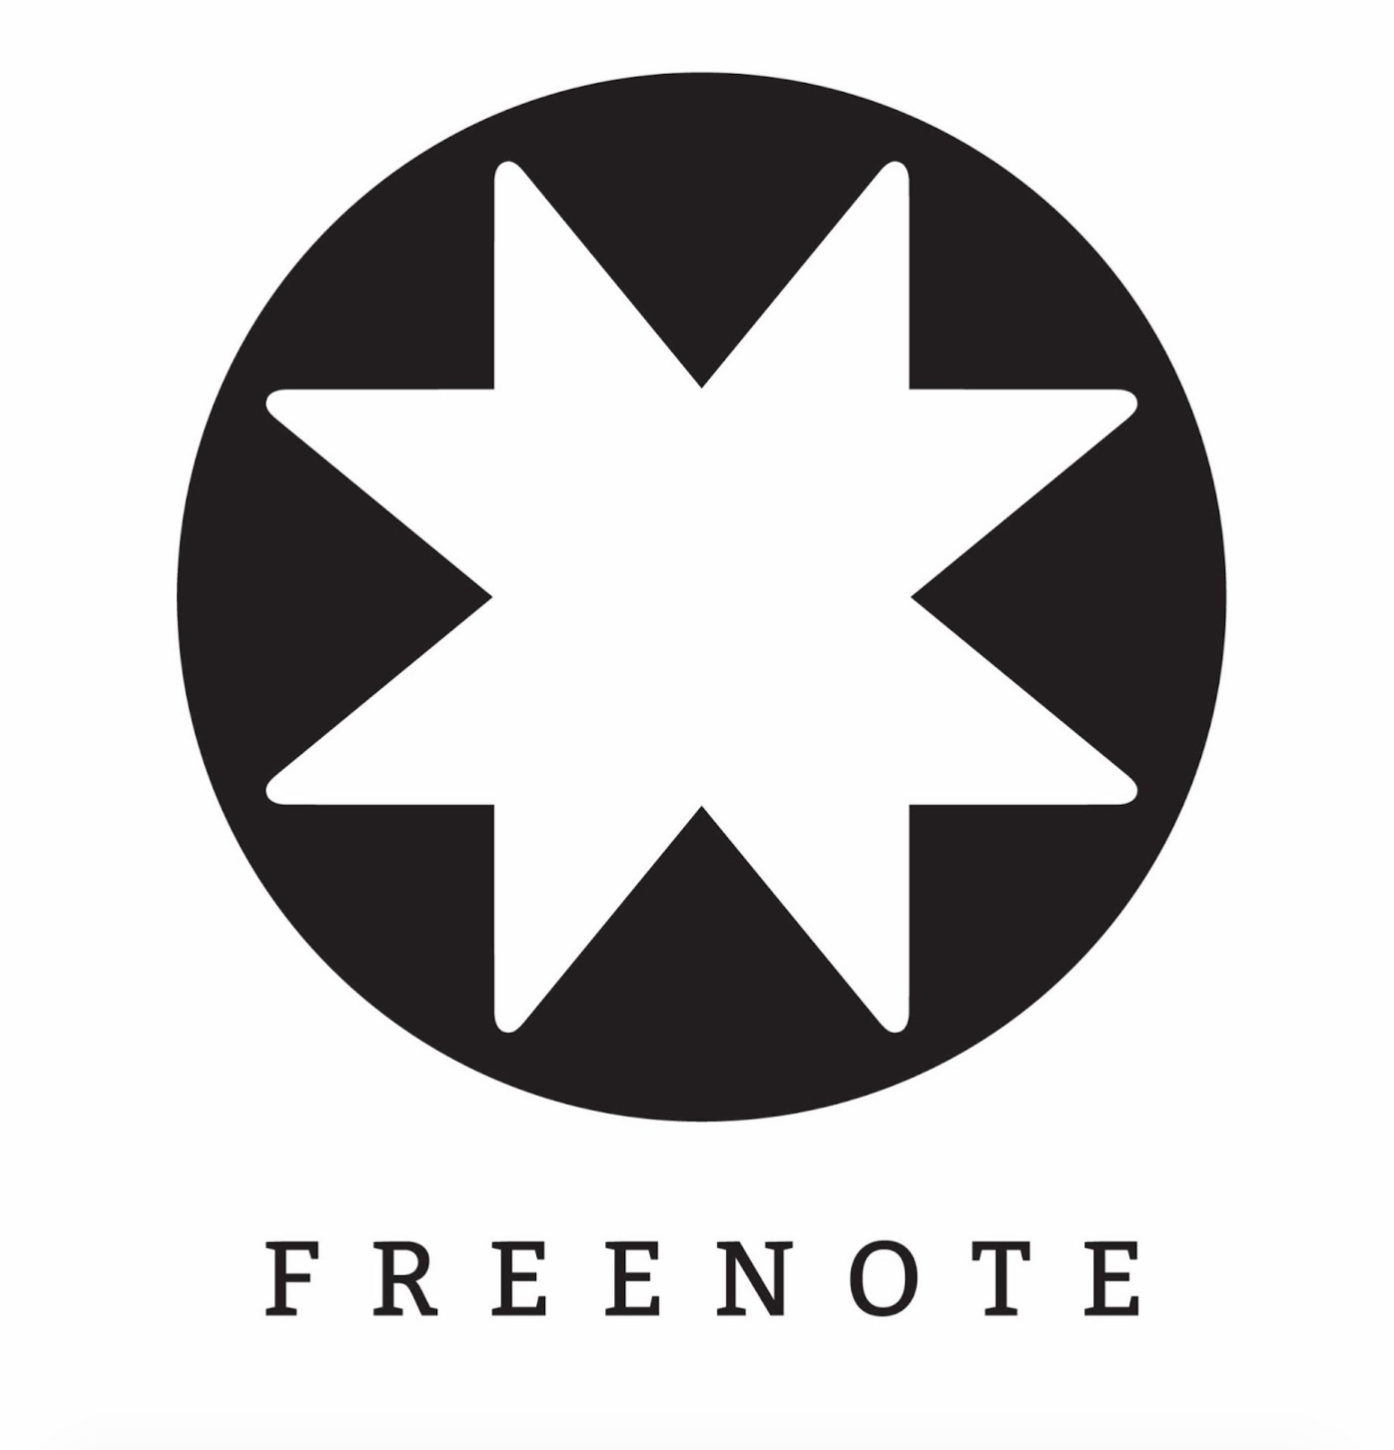 Freenote